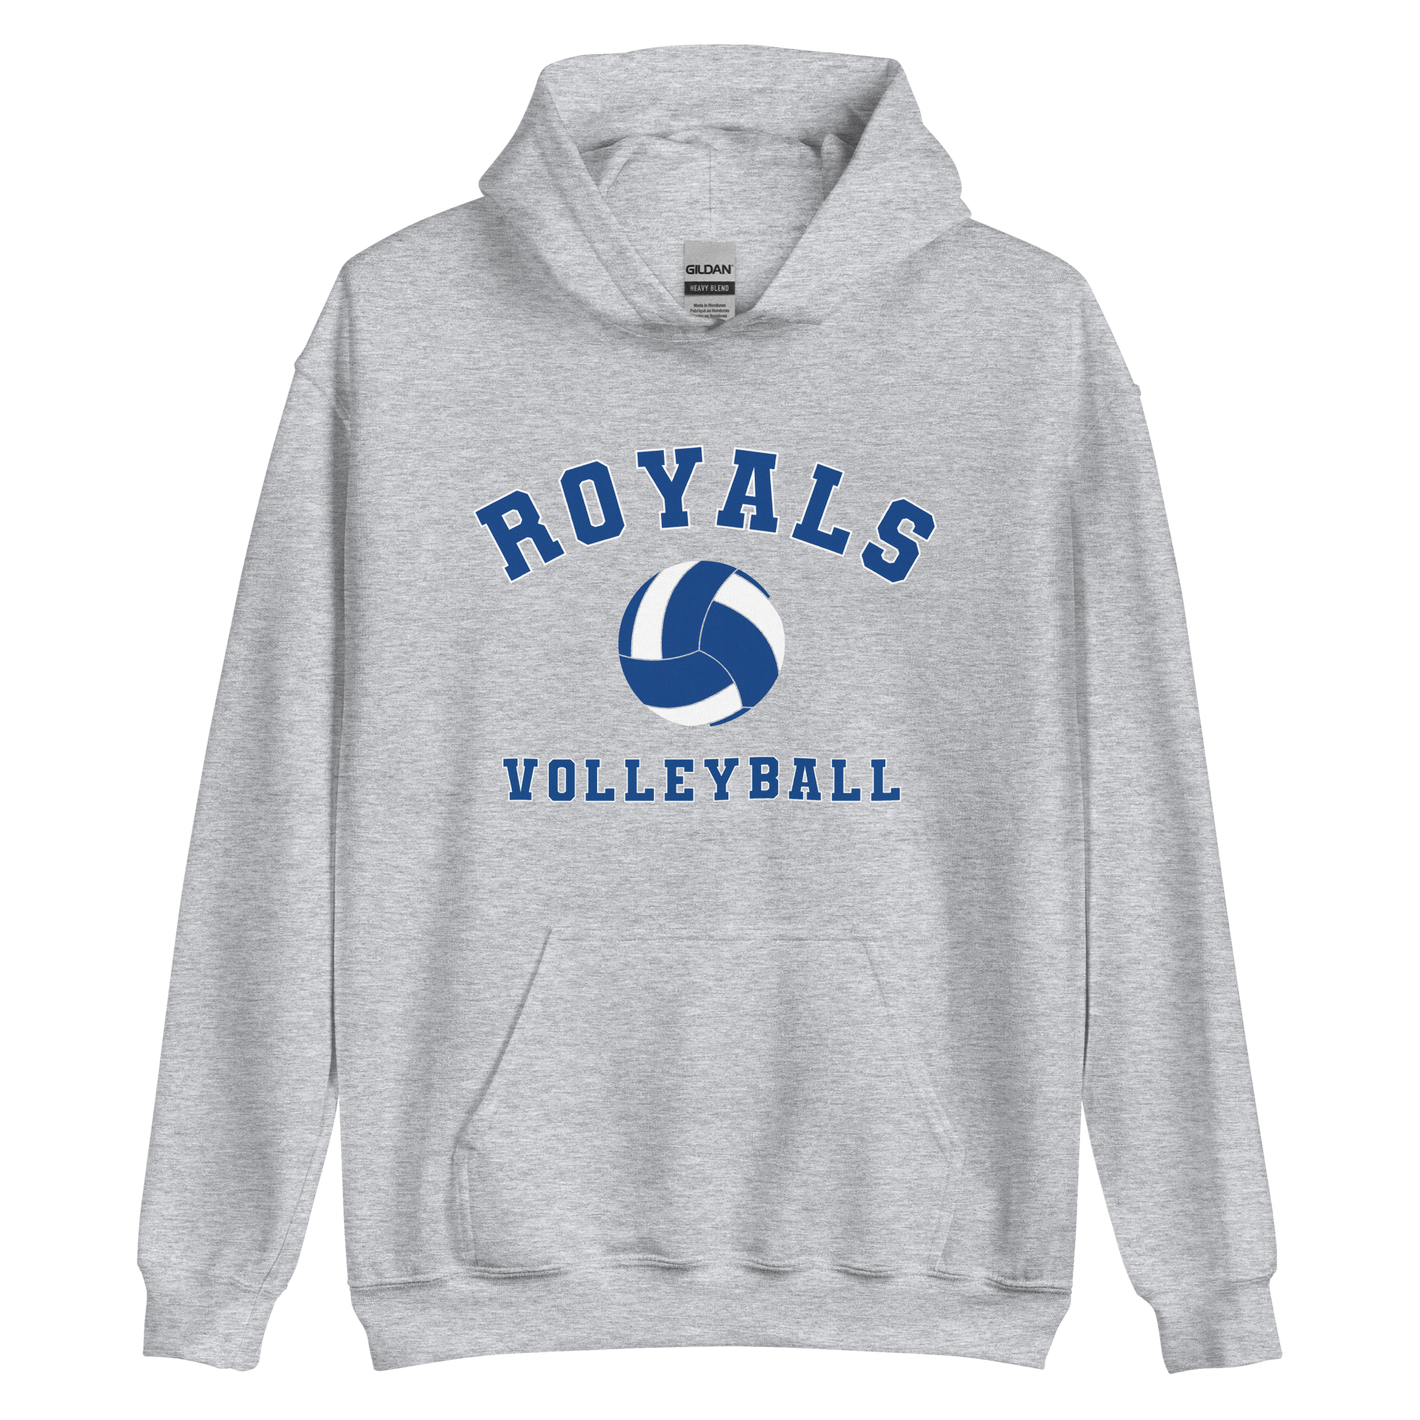 Royals Volleyball Unisex Hoodie